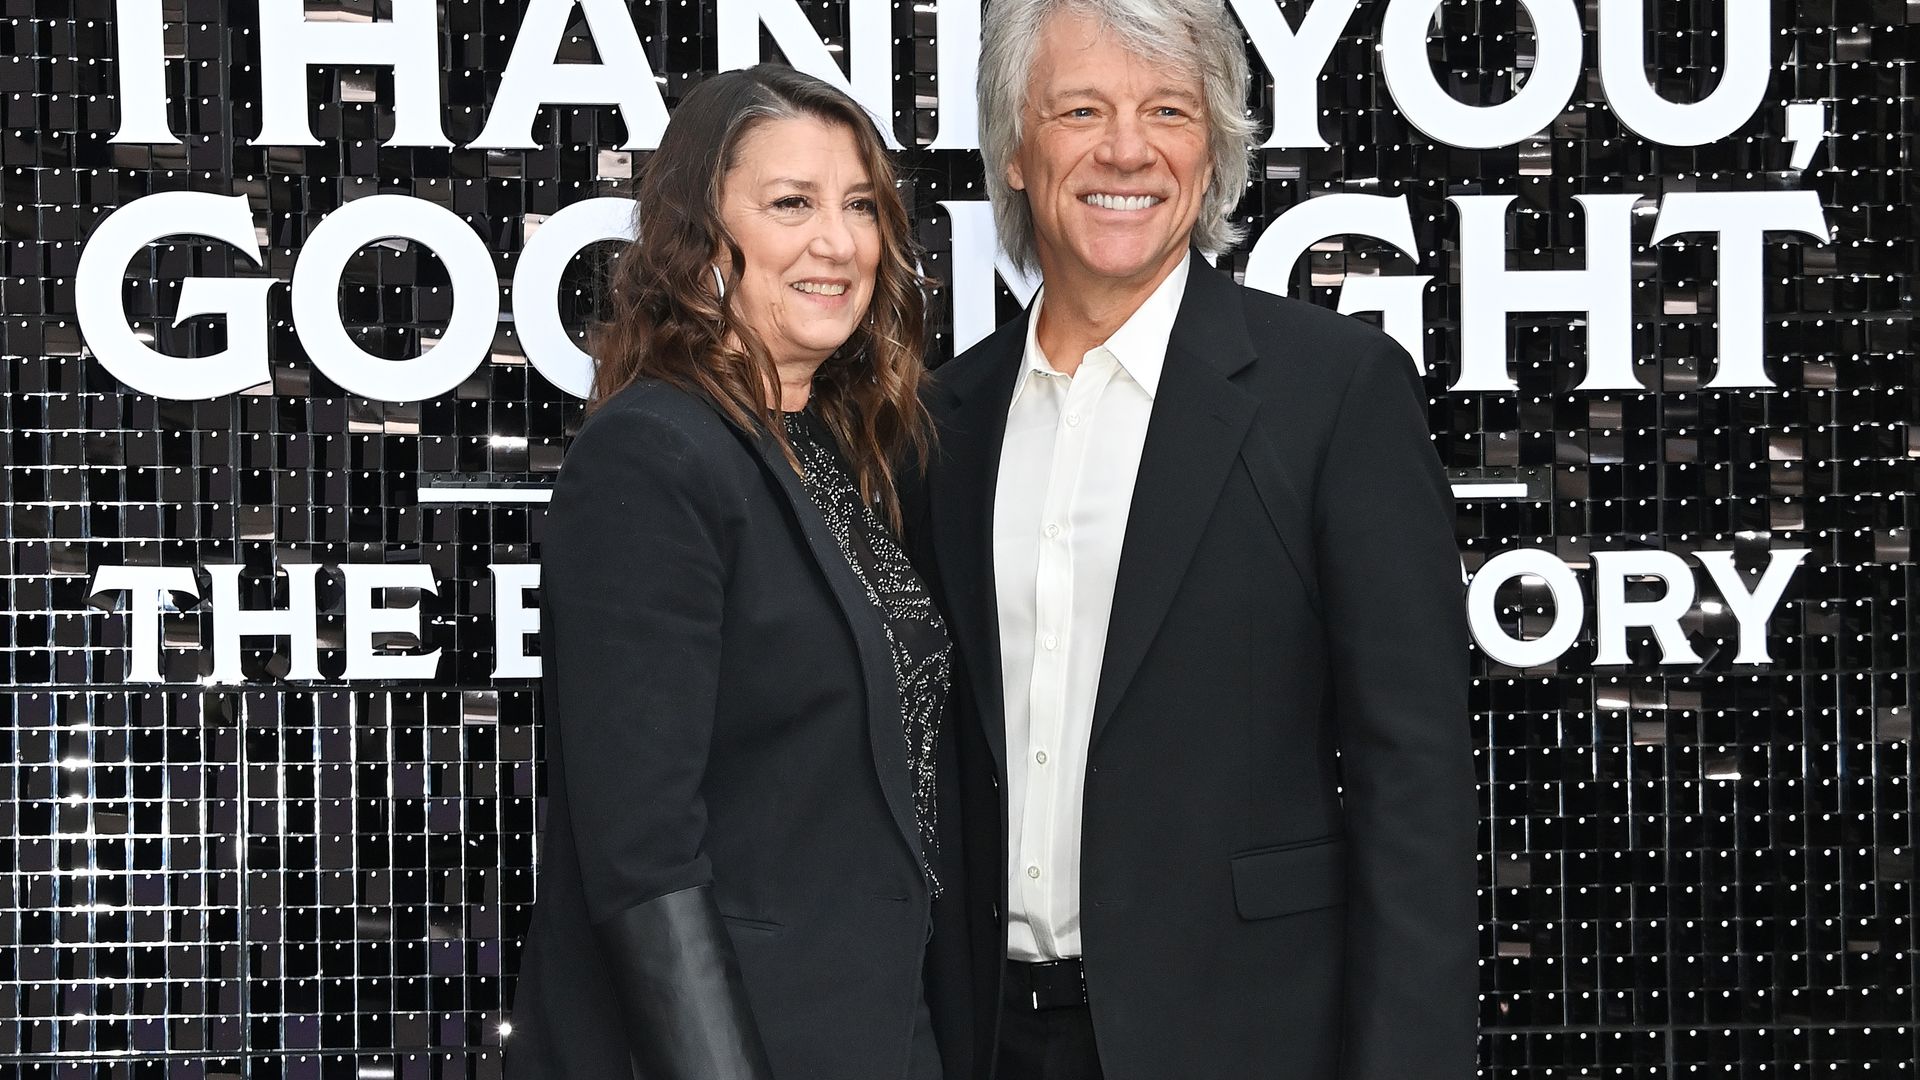 Inside Jon Bon Jovi's marriage to Dorothea: from surviving daughter's overdose to Las Vegas elopement